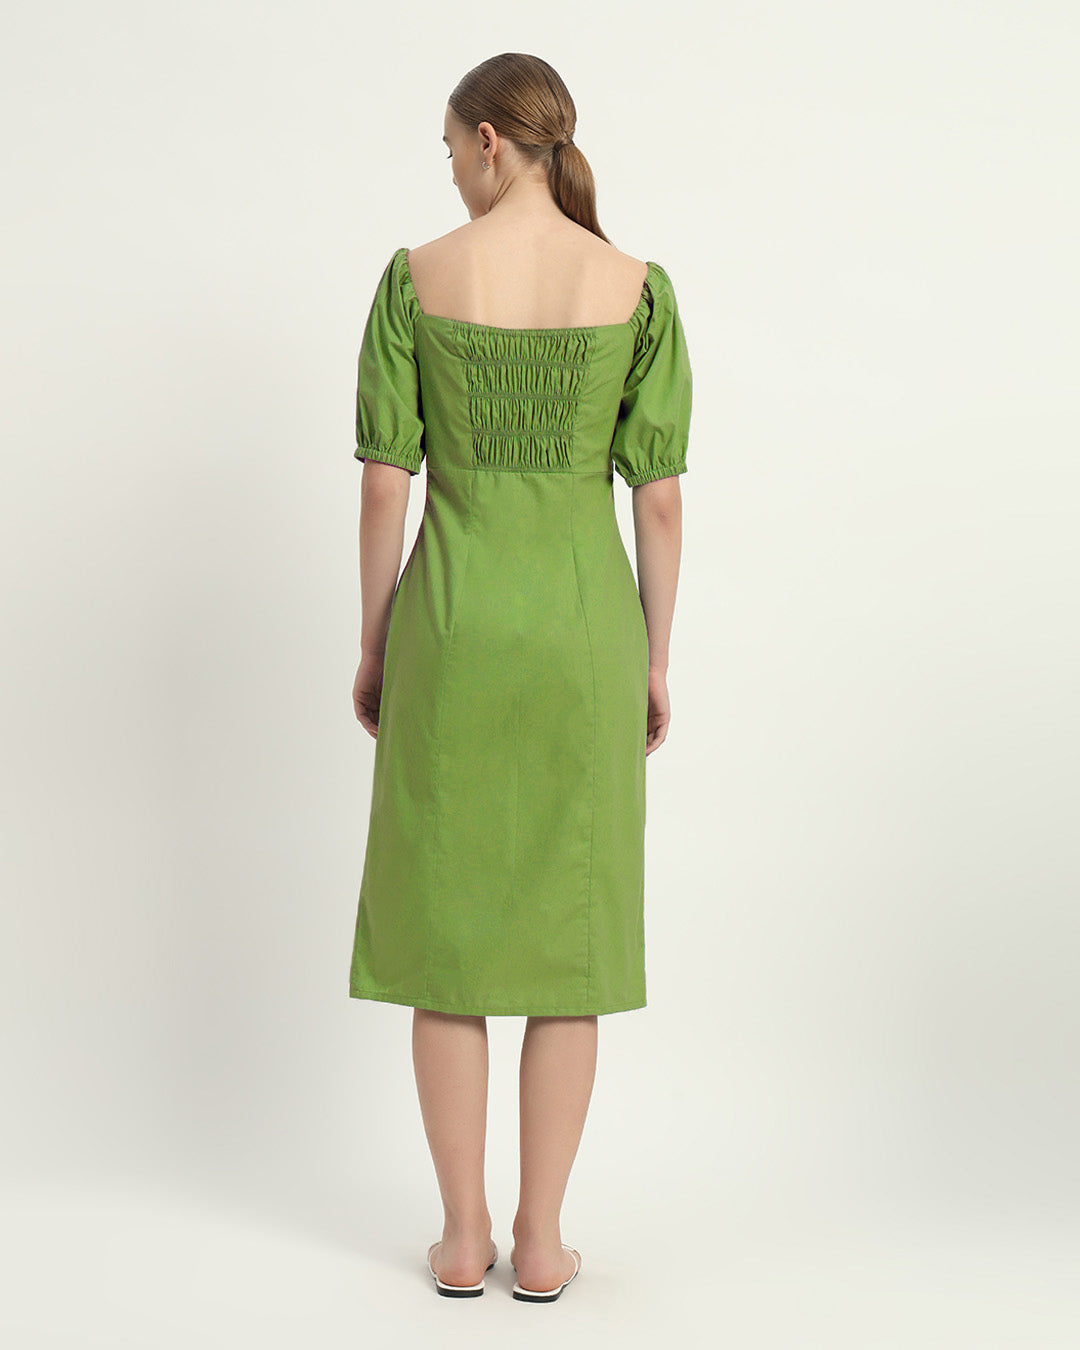 The Erwin Fern Cotton Dress